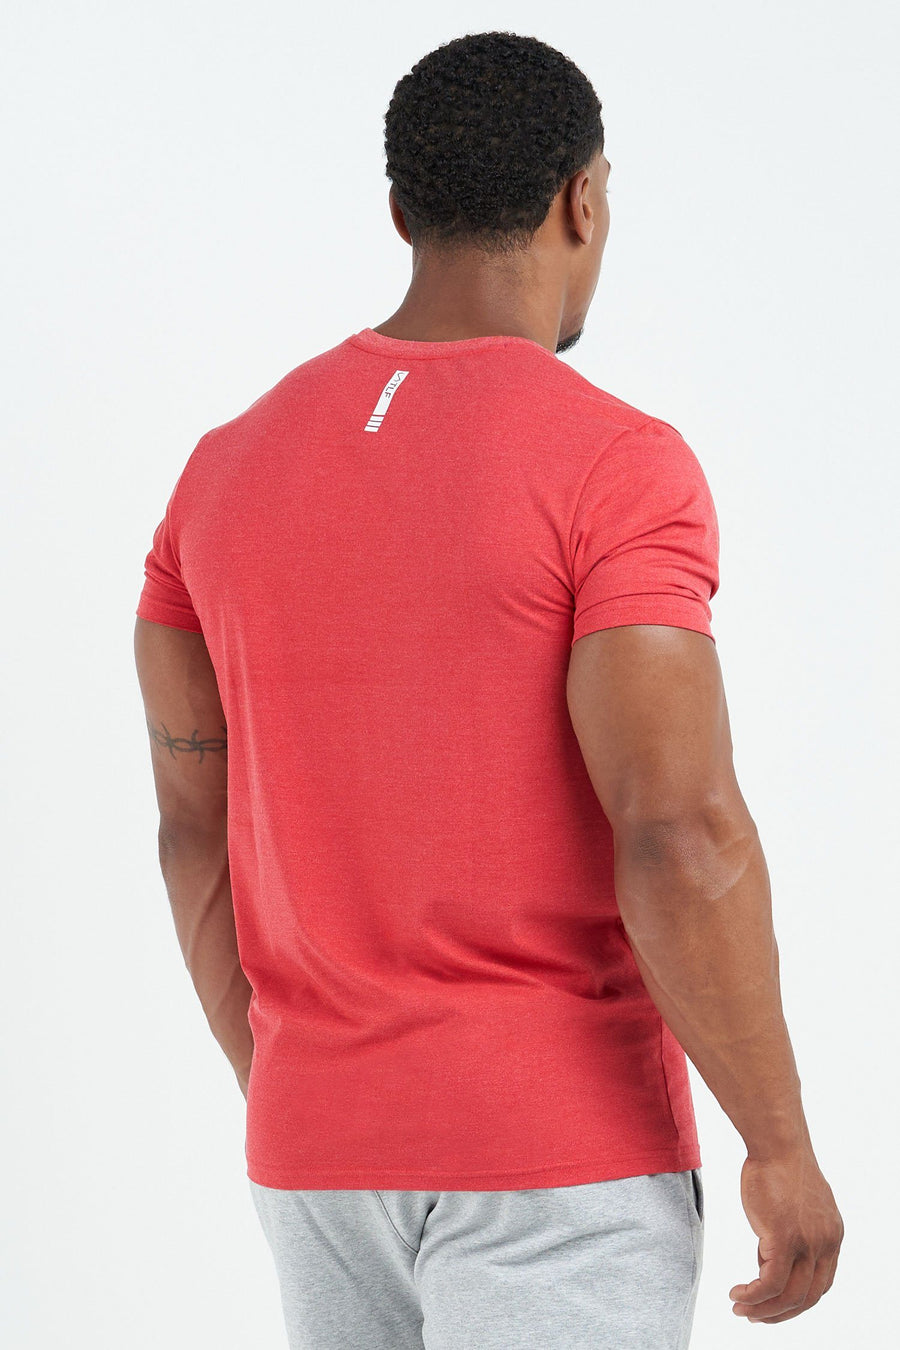 TLF Lift Gym T-Shirt - Gym T Shirts For Men - Red 2